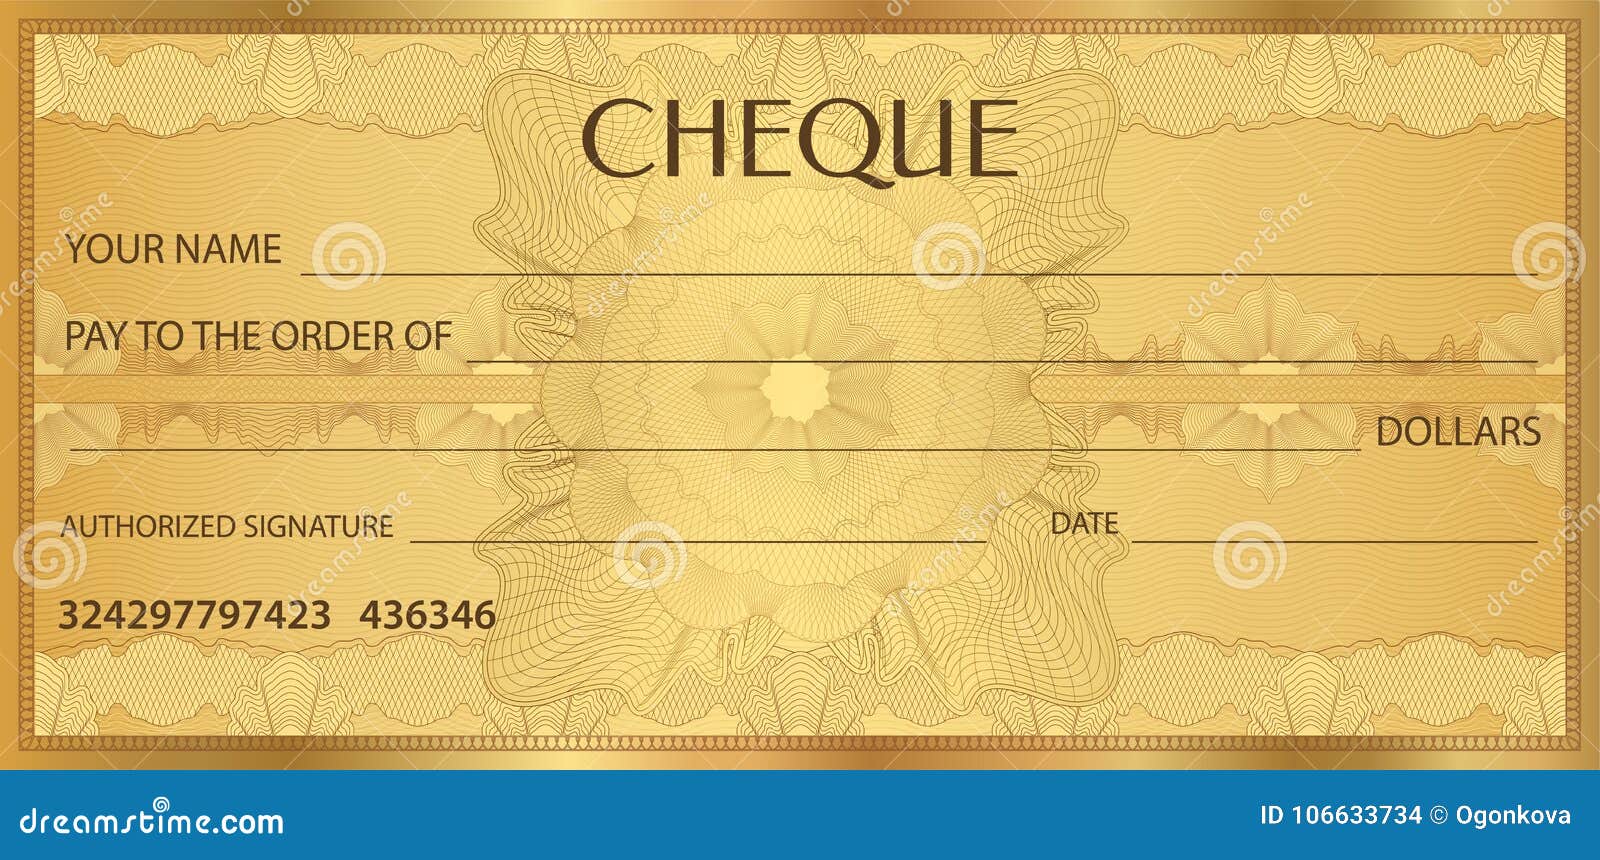 check cheque, chequebook template. guilloche pattern with watermark, spirograph